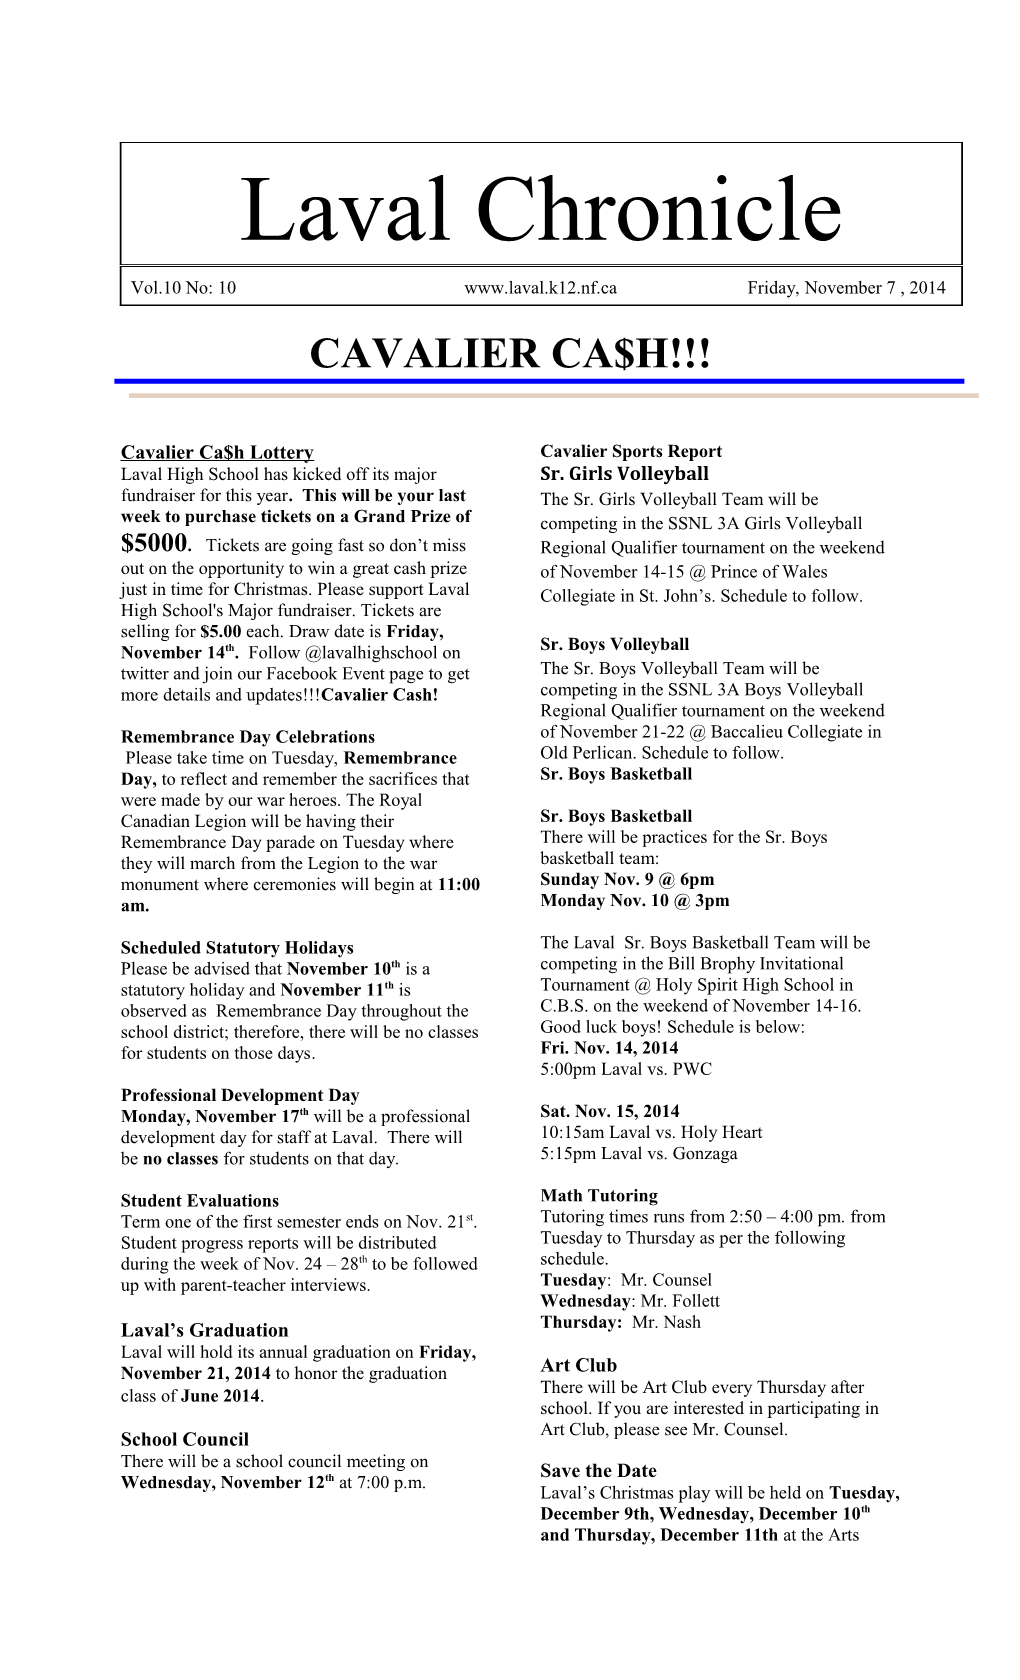 Cavalier Ca$H Lottery